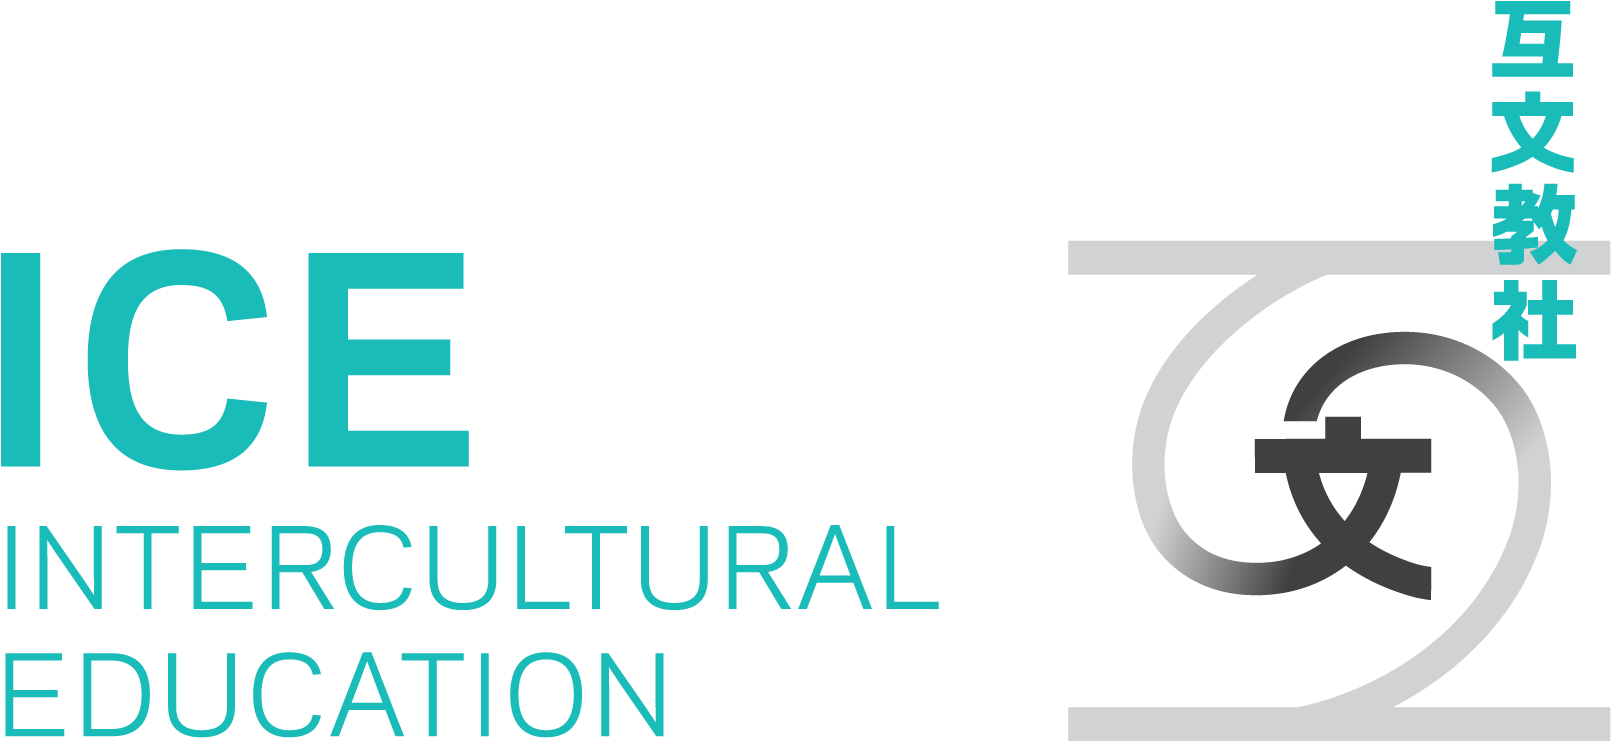 Inter Cultural Education - Dm Wenceslao & Associates Inc Logo (1765x877)